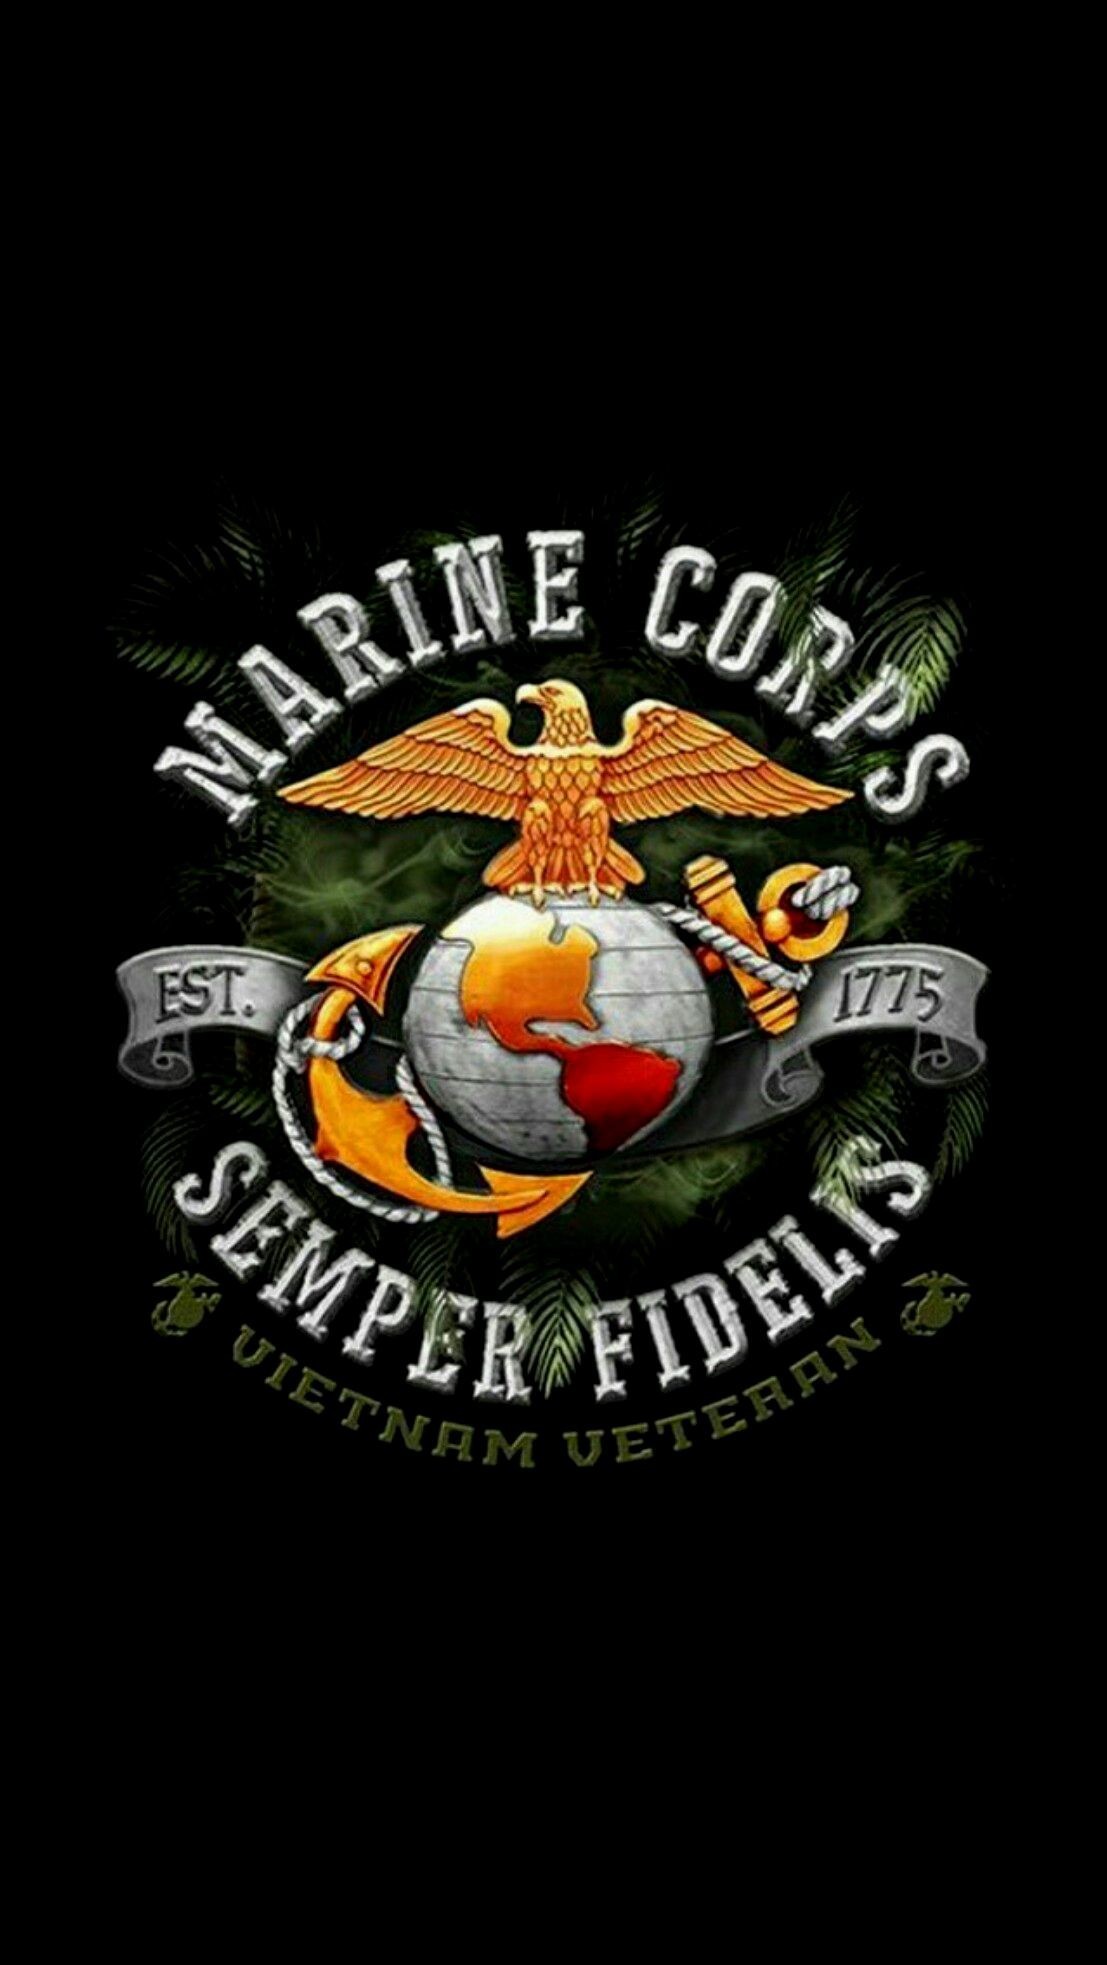 marine corps wallpaper  Google Search  Marine corps Usmc wallpaper Usmc